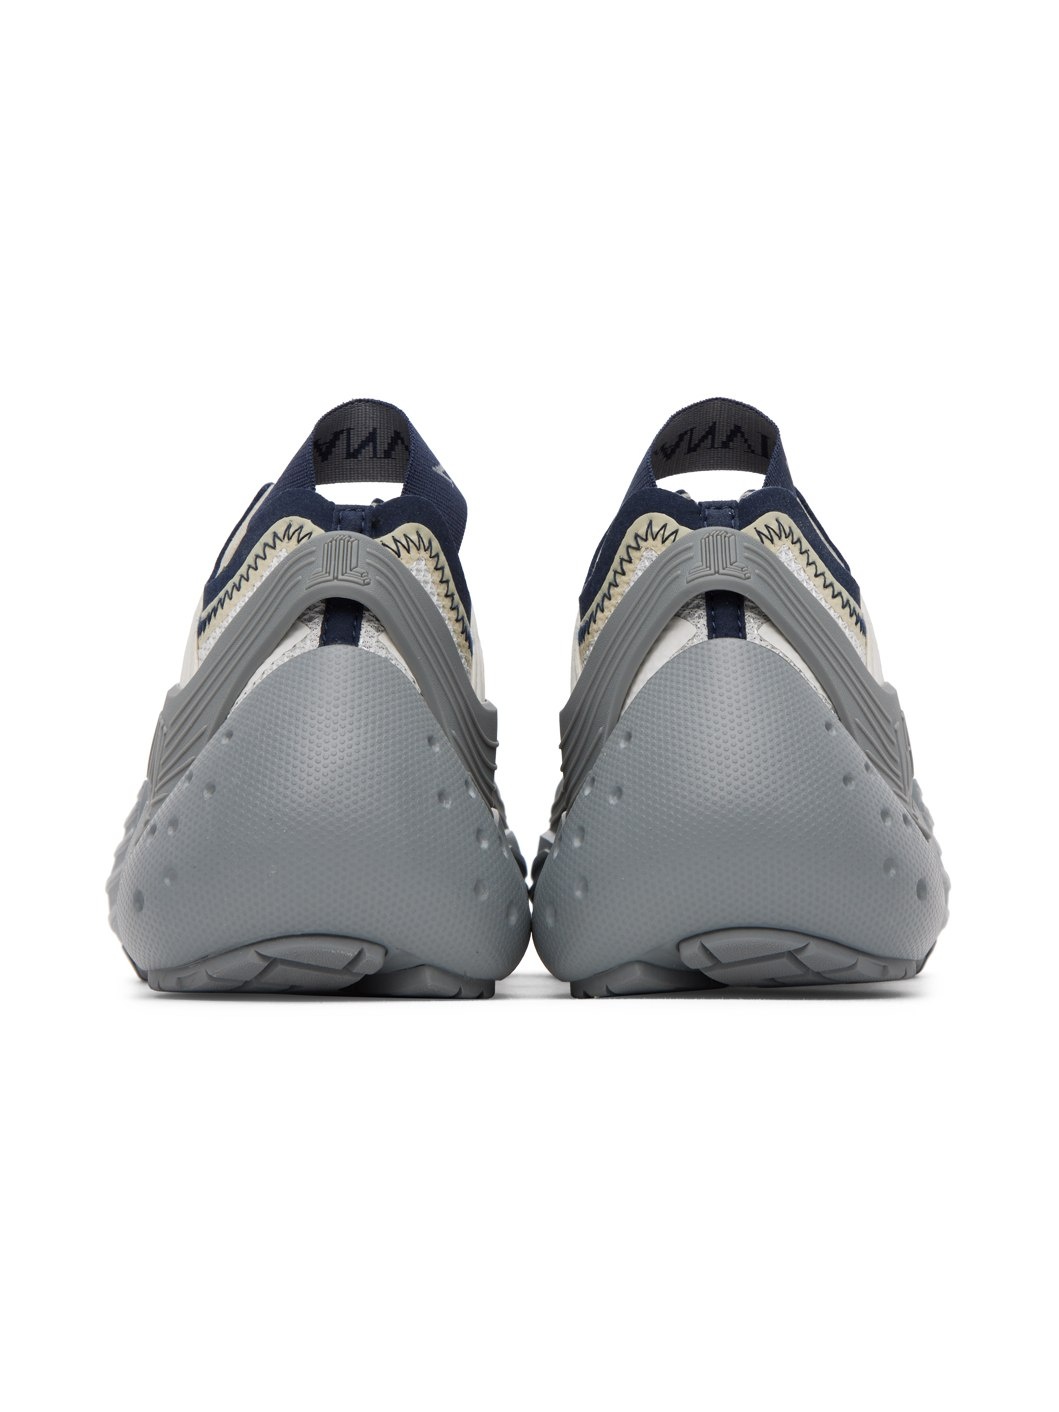 SSENSE Exclusive Gray & Navy Flash-X Sneakers - 2